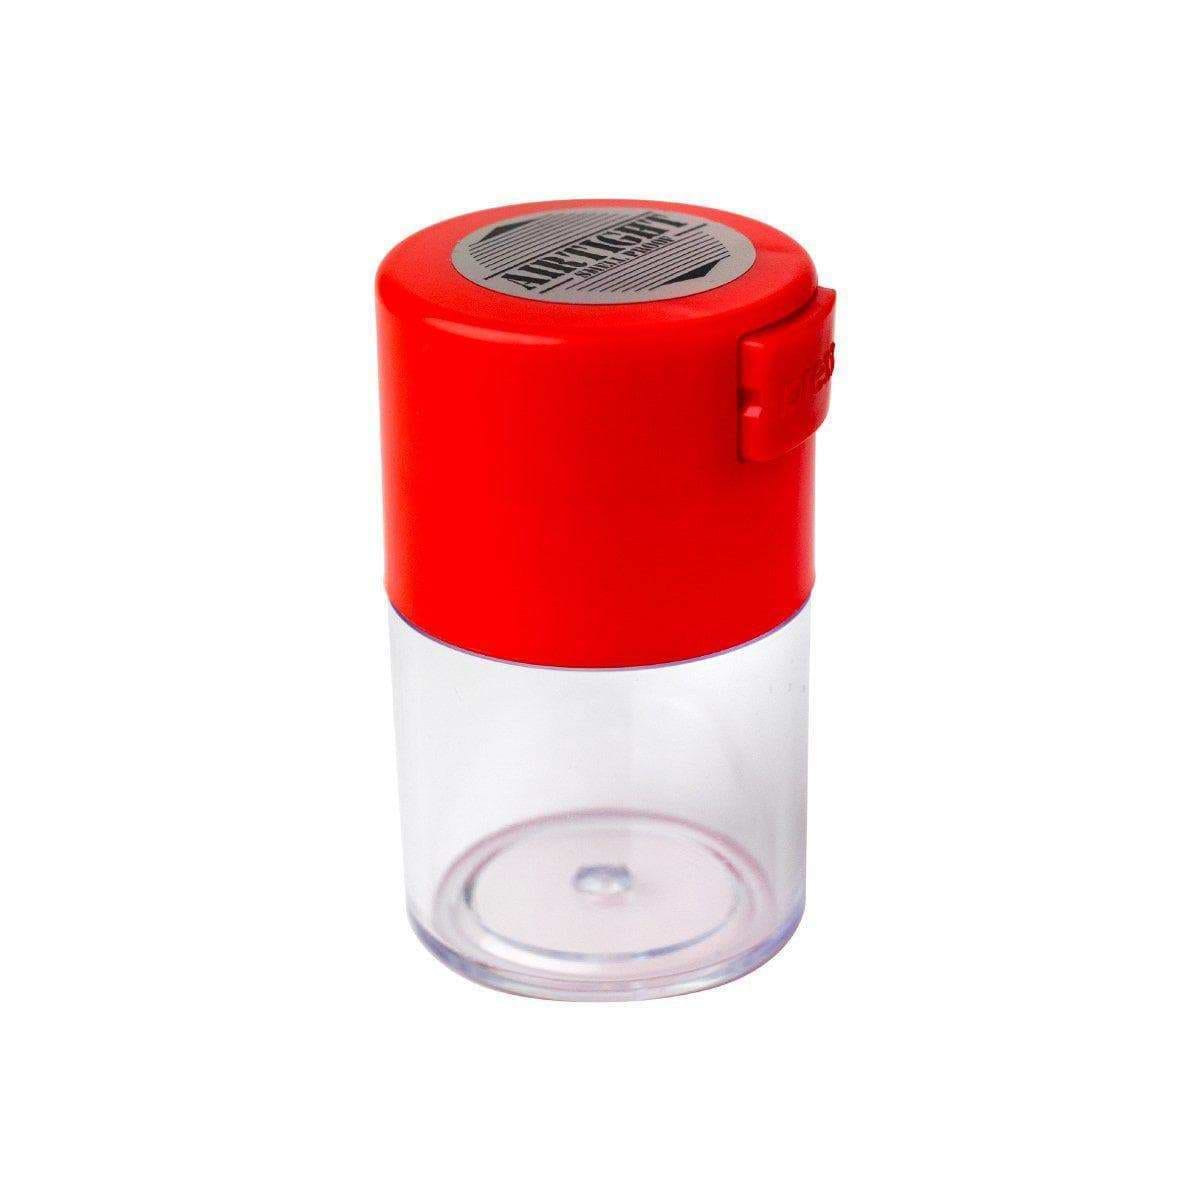 1-oz airtight Tightvac herb storage clear body vacuum seal keep herbs fresh and moisture-free airtight label on red lid